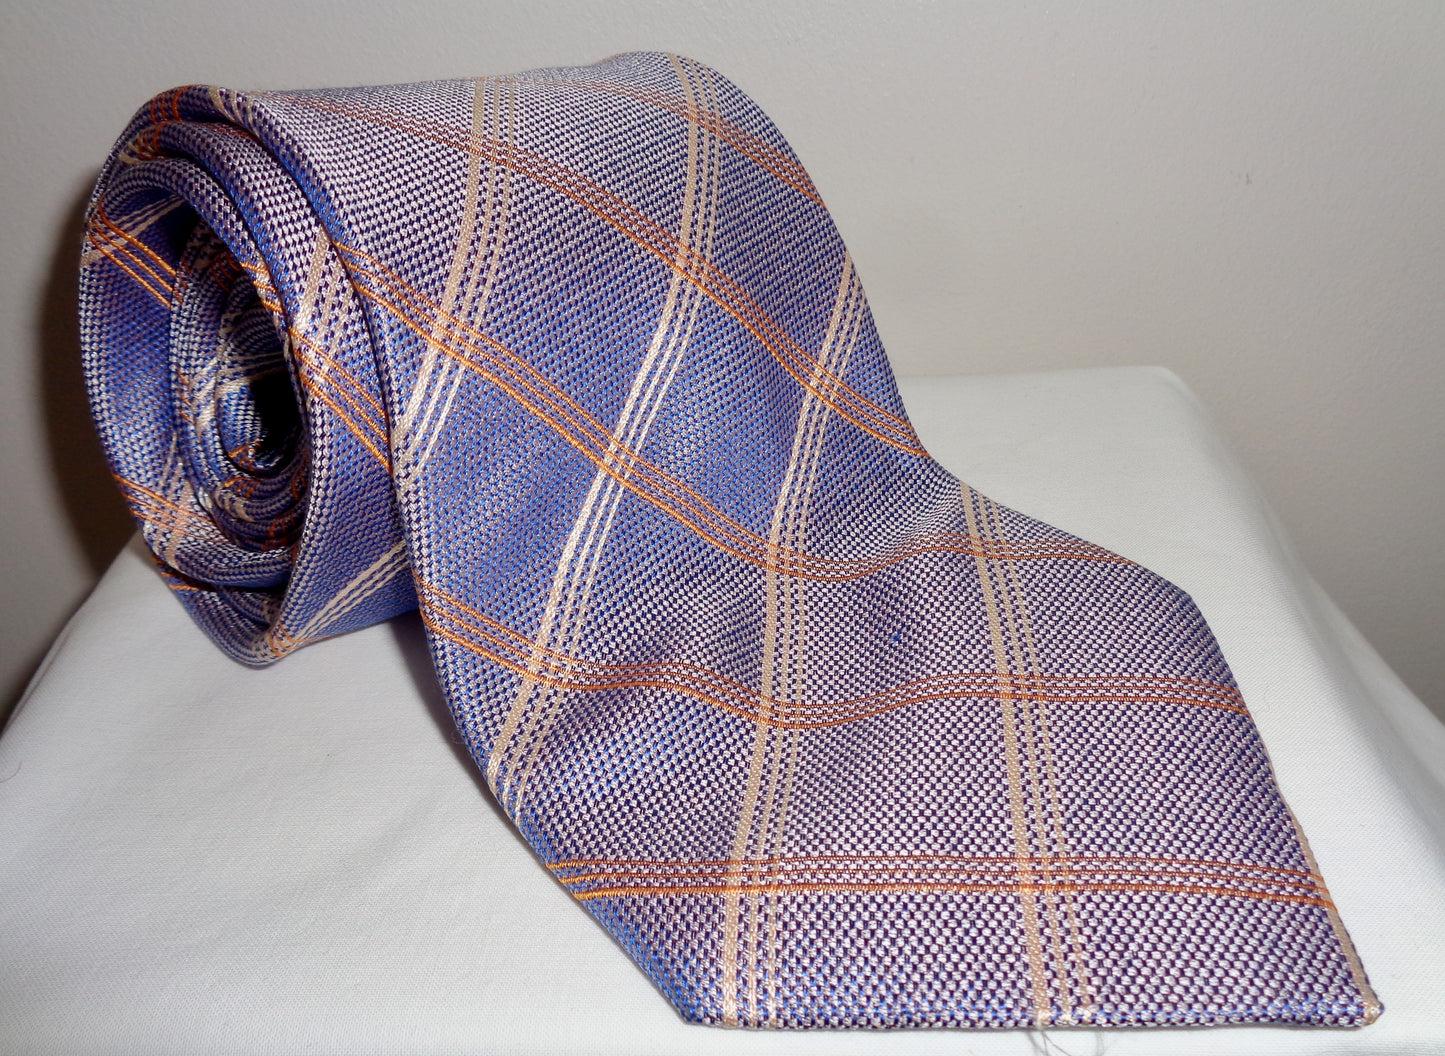 Vintage Tie Rack Silk Tie Purple With Diagonal Lines In Orange And Cream